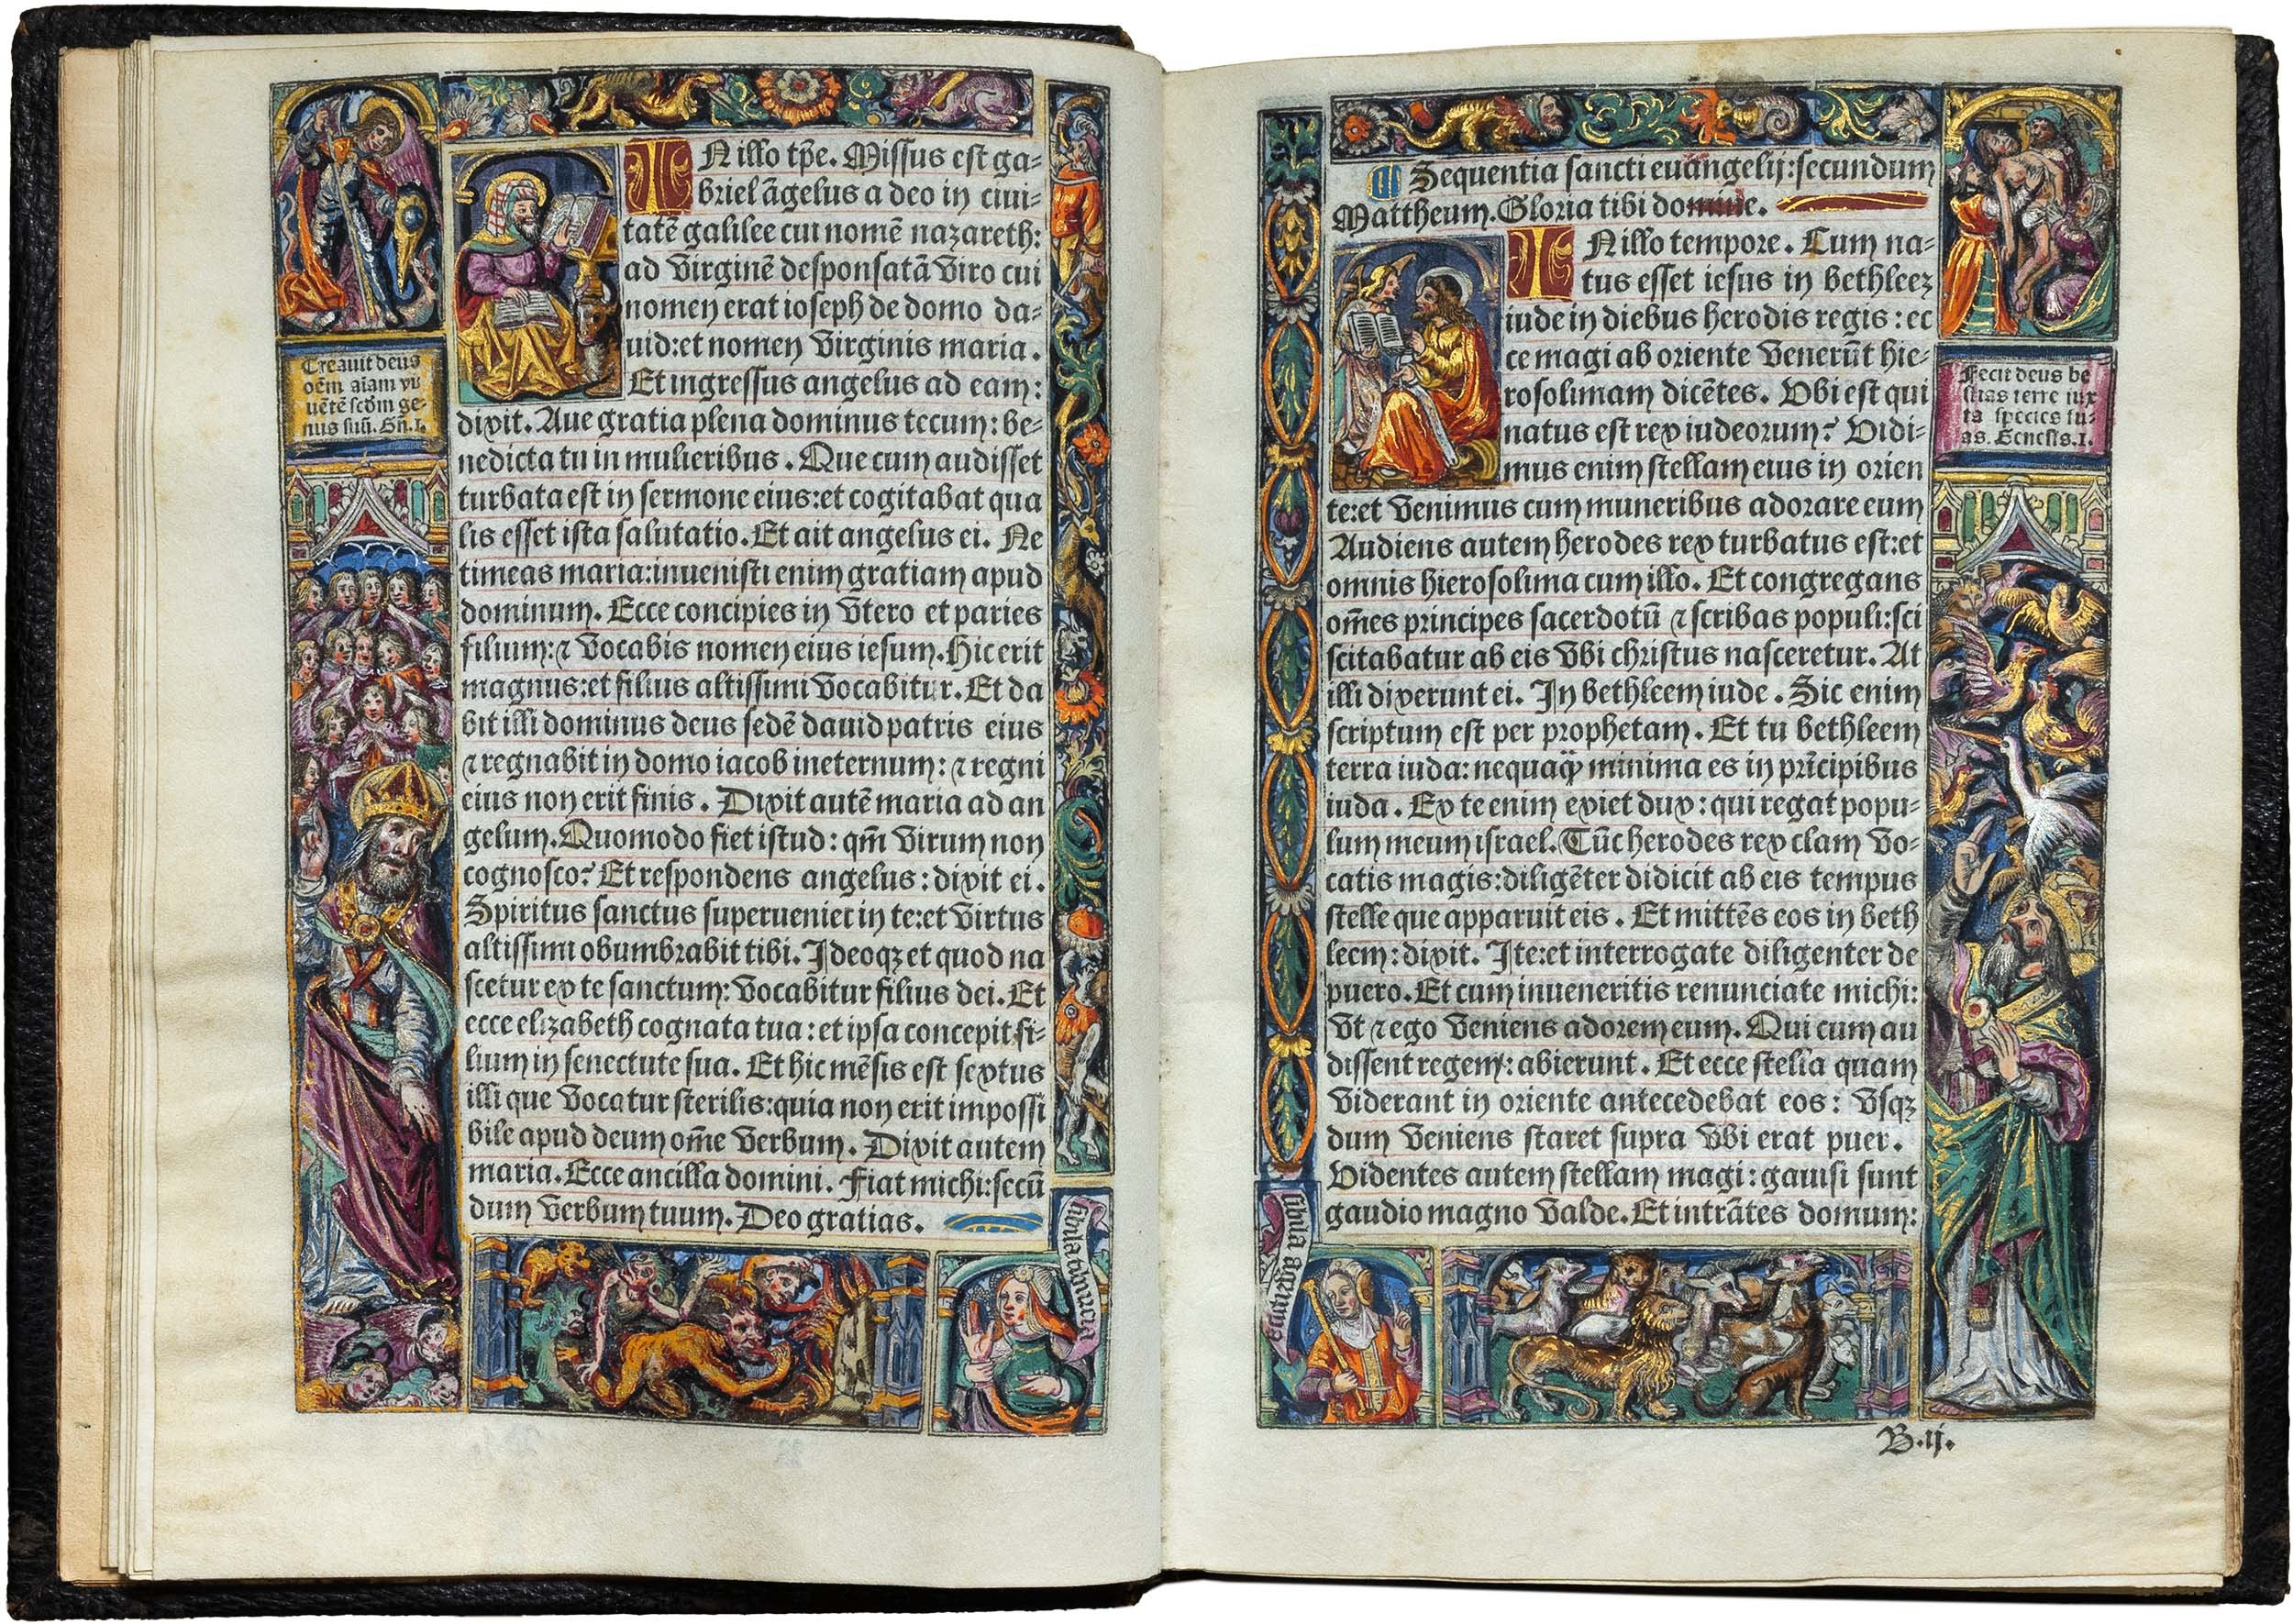 Printed-Book-of-Hours-10-january-1503-horae-bmv-kerver-remacle-illuminated-vellum-copy-schönborn-buchheim-13.jpg